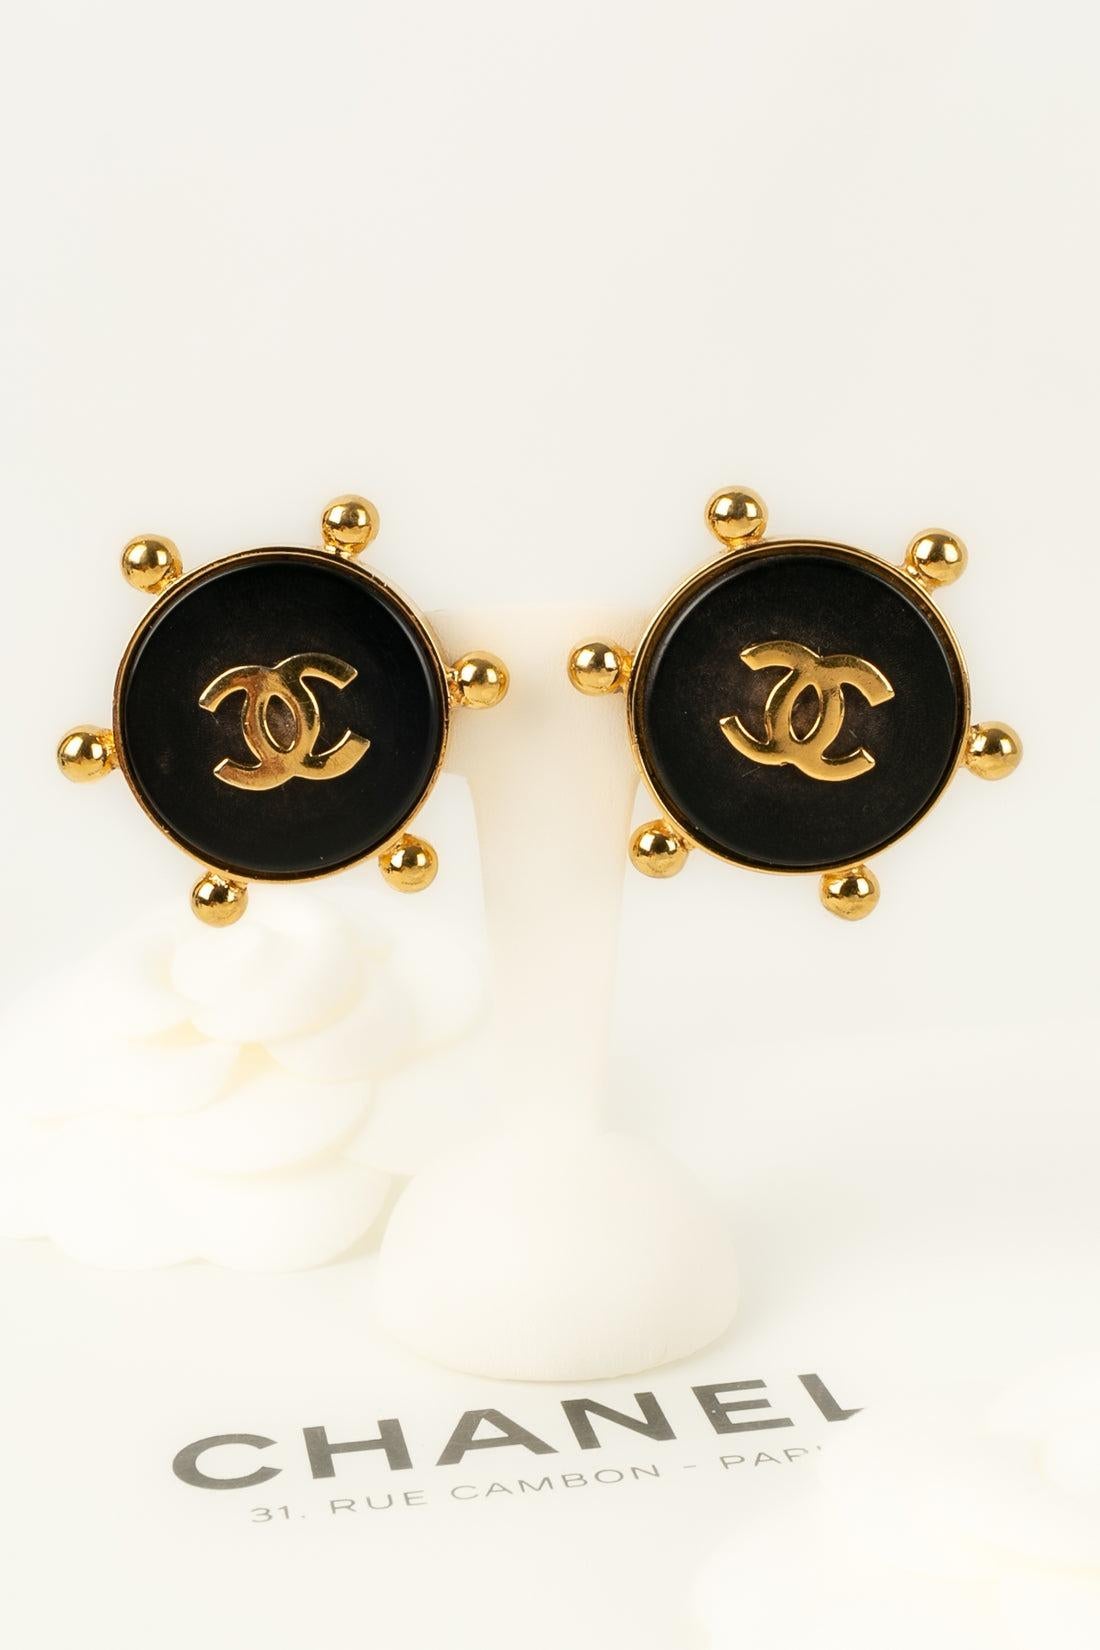 Chanel Earrings in Golden Metal and Black Bakelite 3